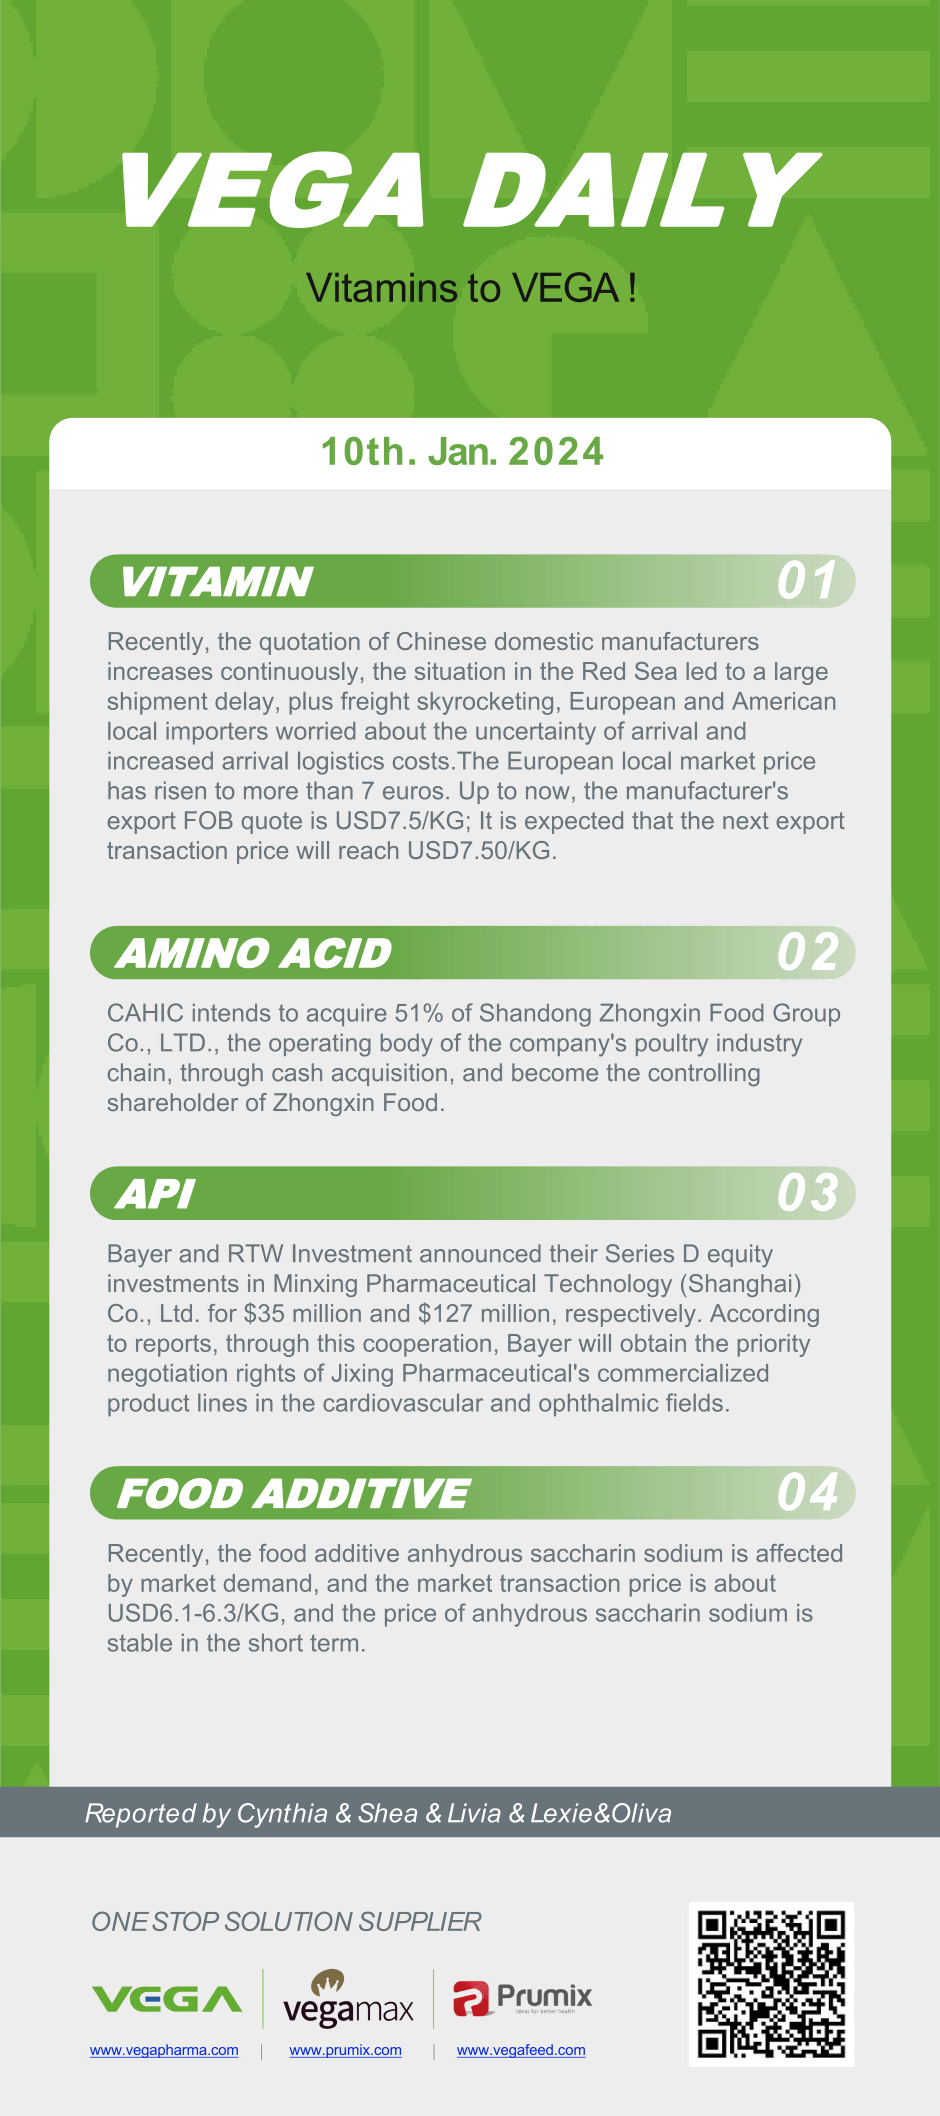 Vega Daily Dated on Jan 10th 2024 Vitamin Amino Acid APl Food Additives.png